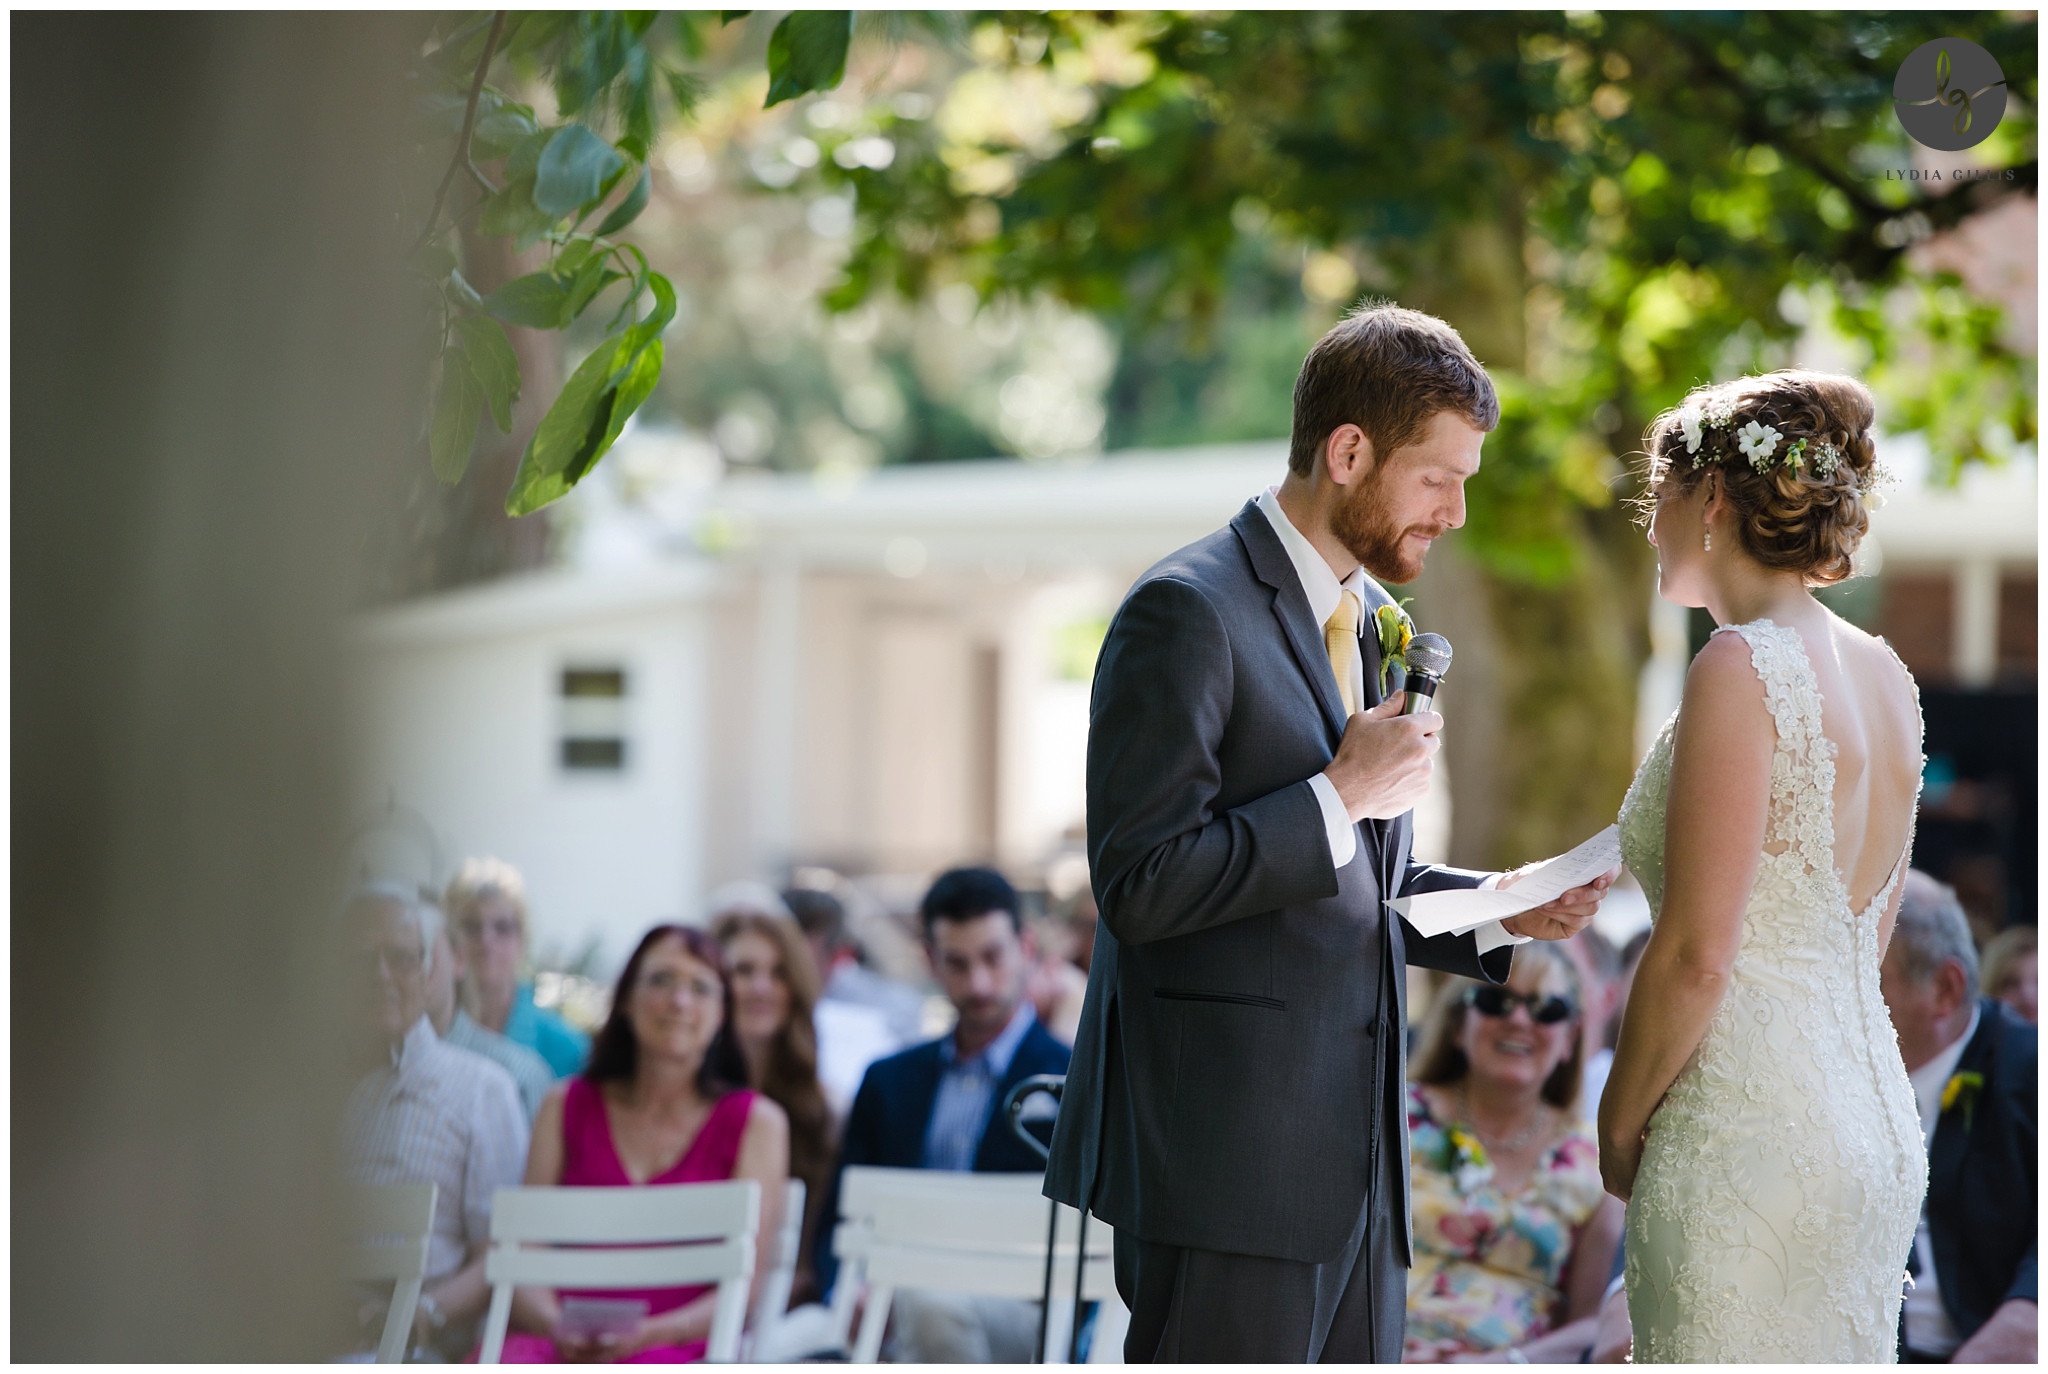 Outdoor wedding ceremony photo | Lydia Gillis Photography 